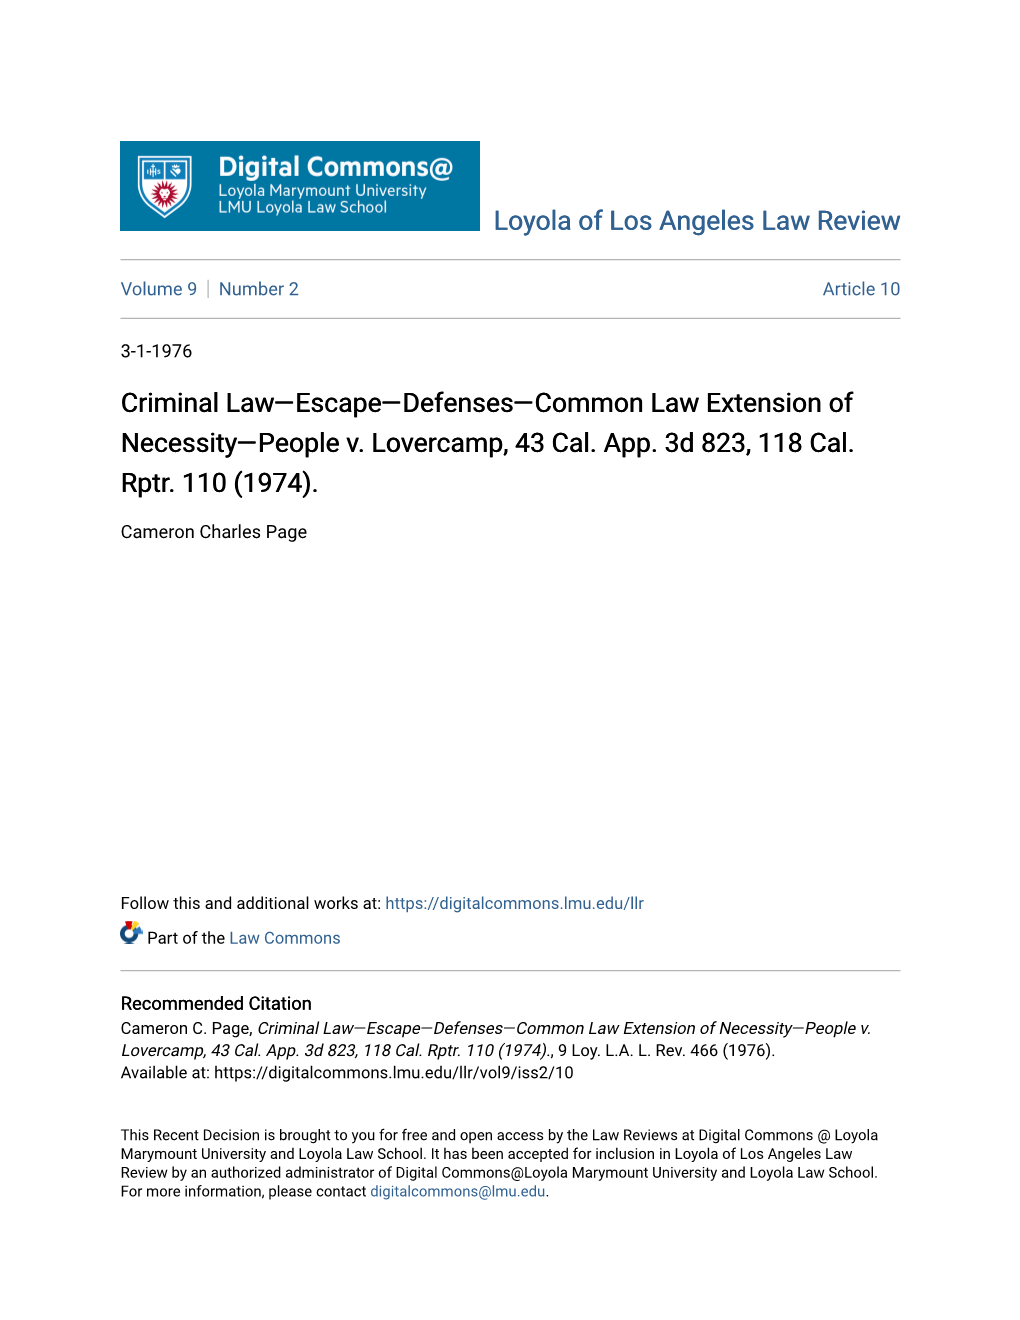 Criminal Lawâ•Flescapeâ•Fldefensesâ•Flcommon Law Extension of Necessityâ•Flpeople V. Lovercamp, 43 Cal. App. 3D